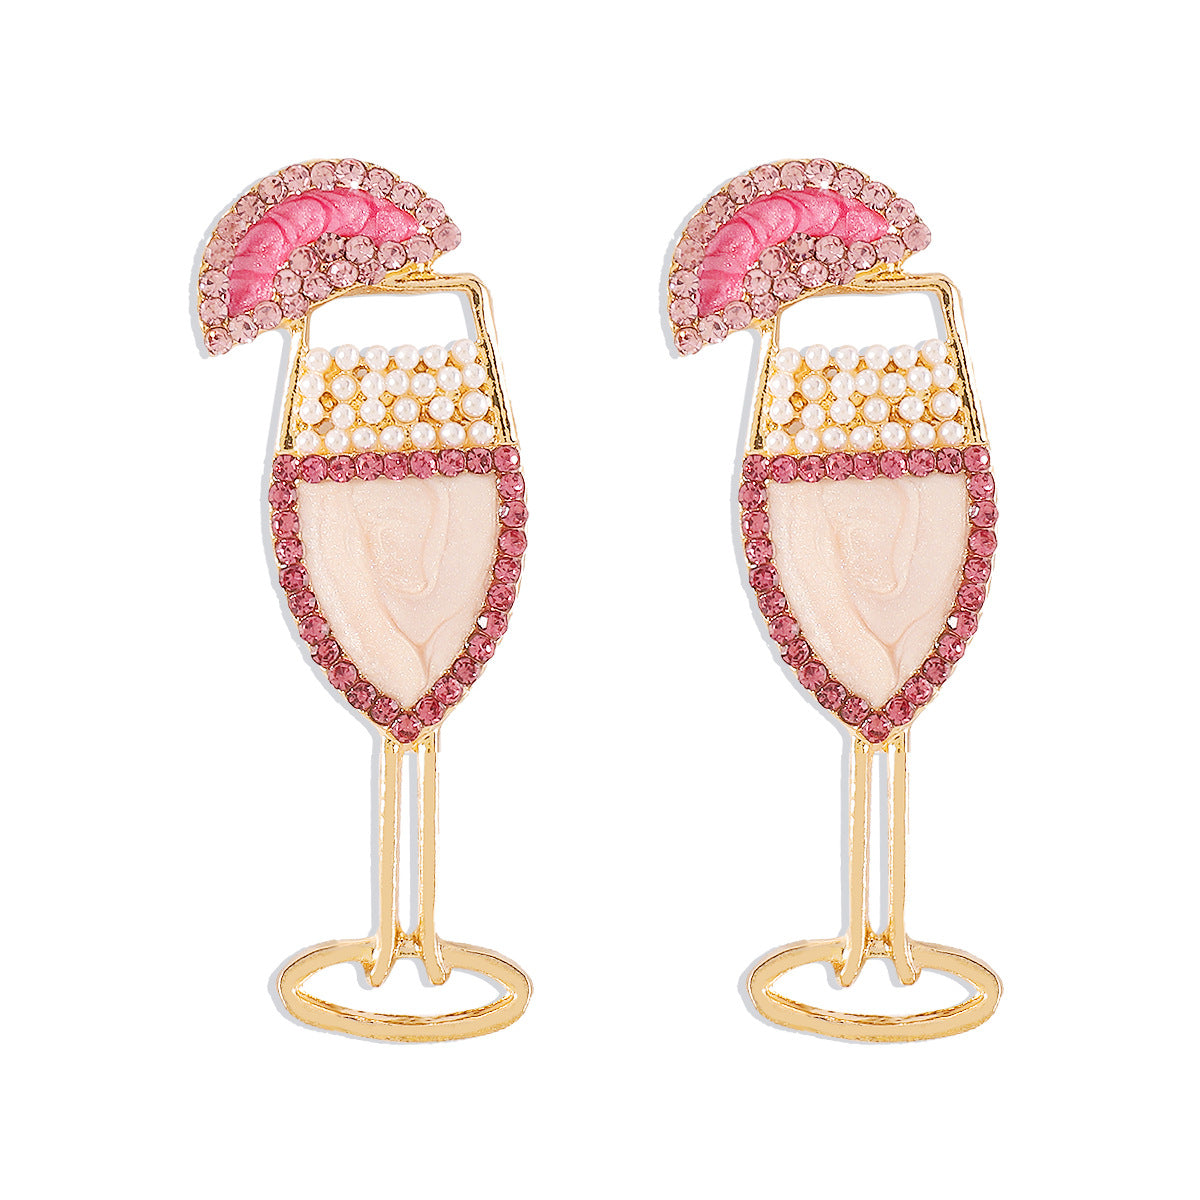 Stylish geometric wine glass earrings